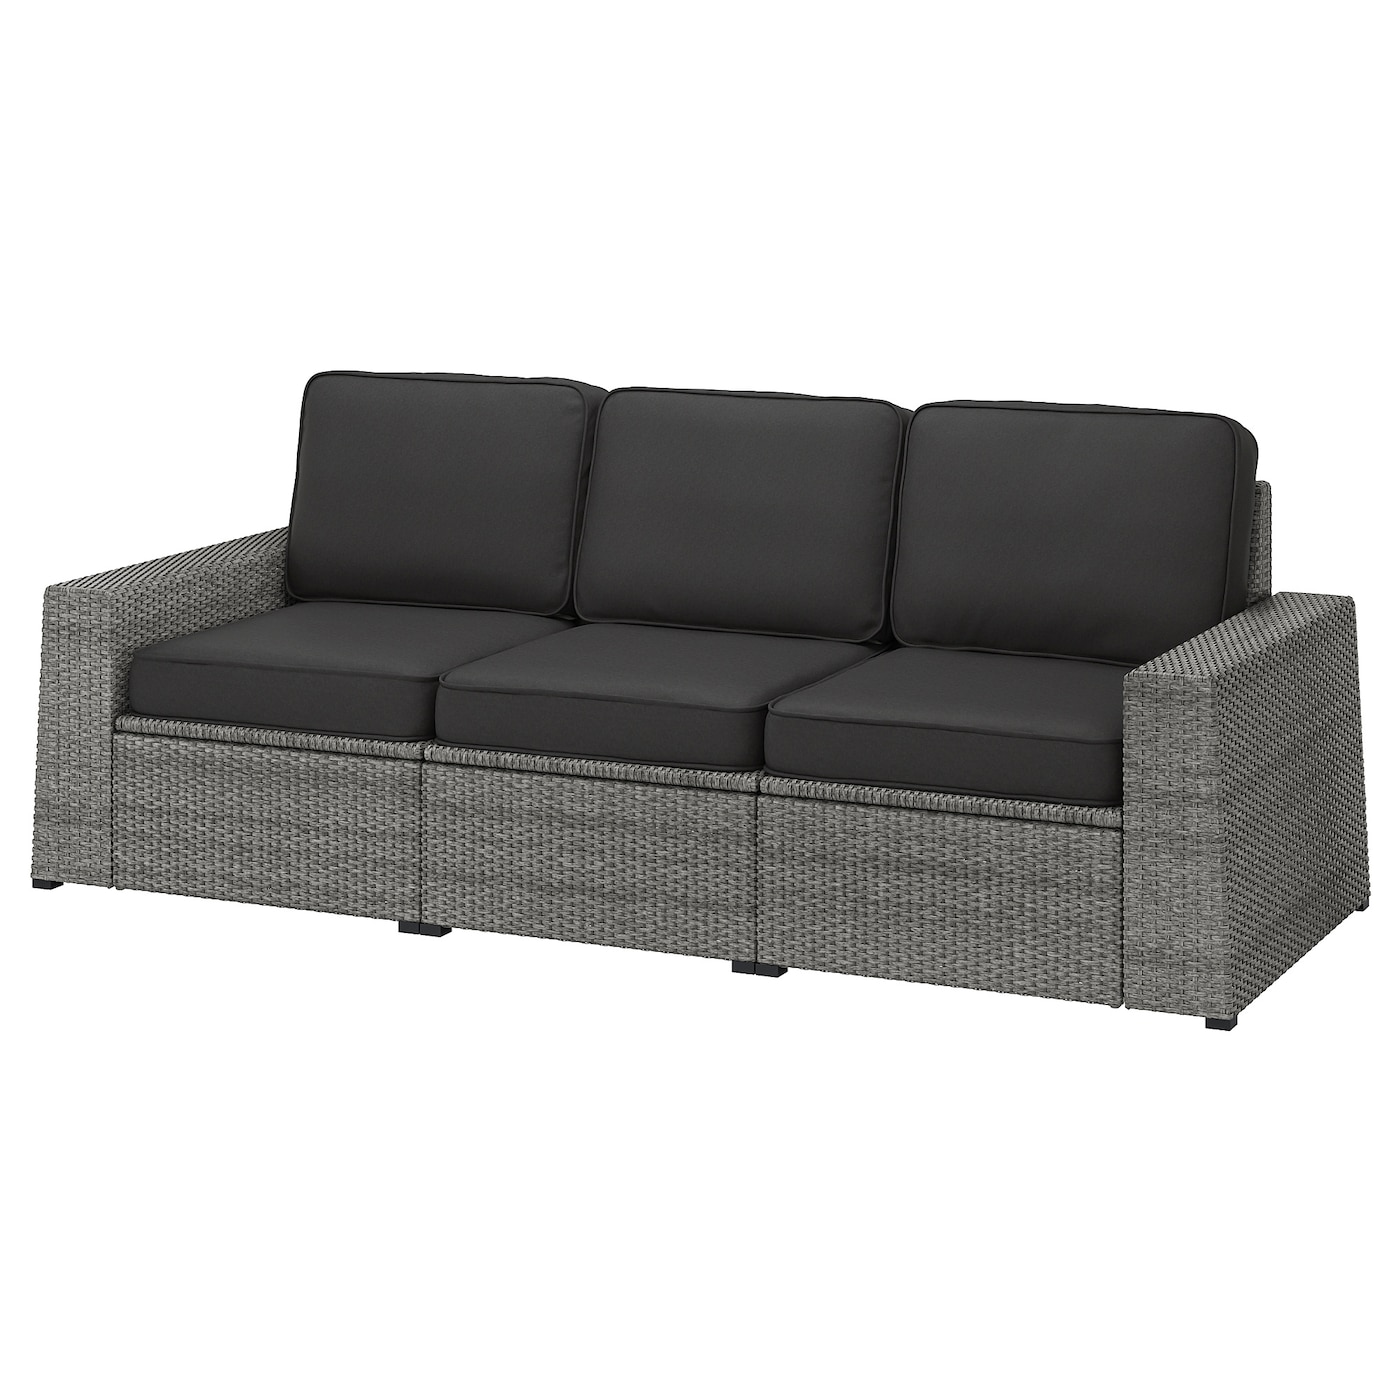 3-местный модульный диван - IKEA SOLLERÖN/SOLLERON/СОЛЛЕРОН ИКЕА, 90х82х223 см, черный/серый